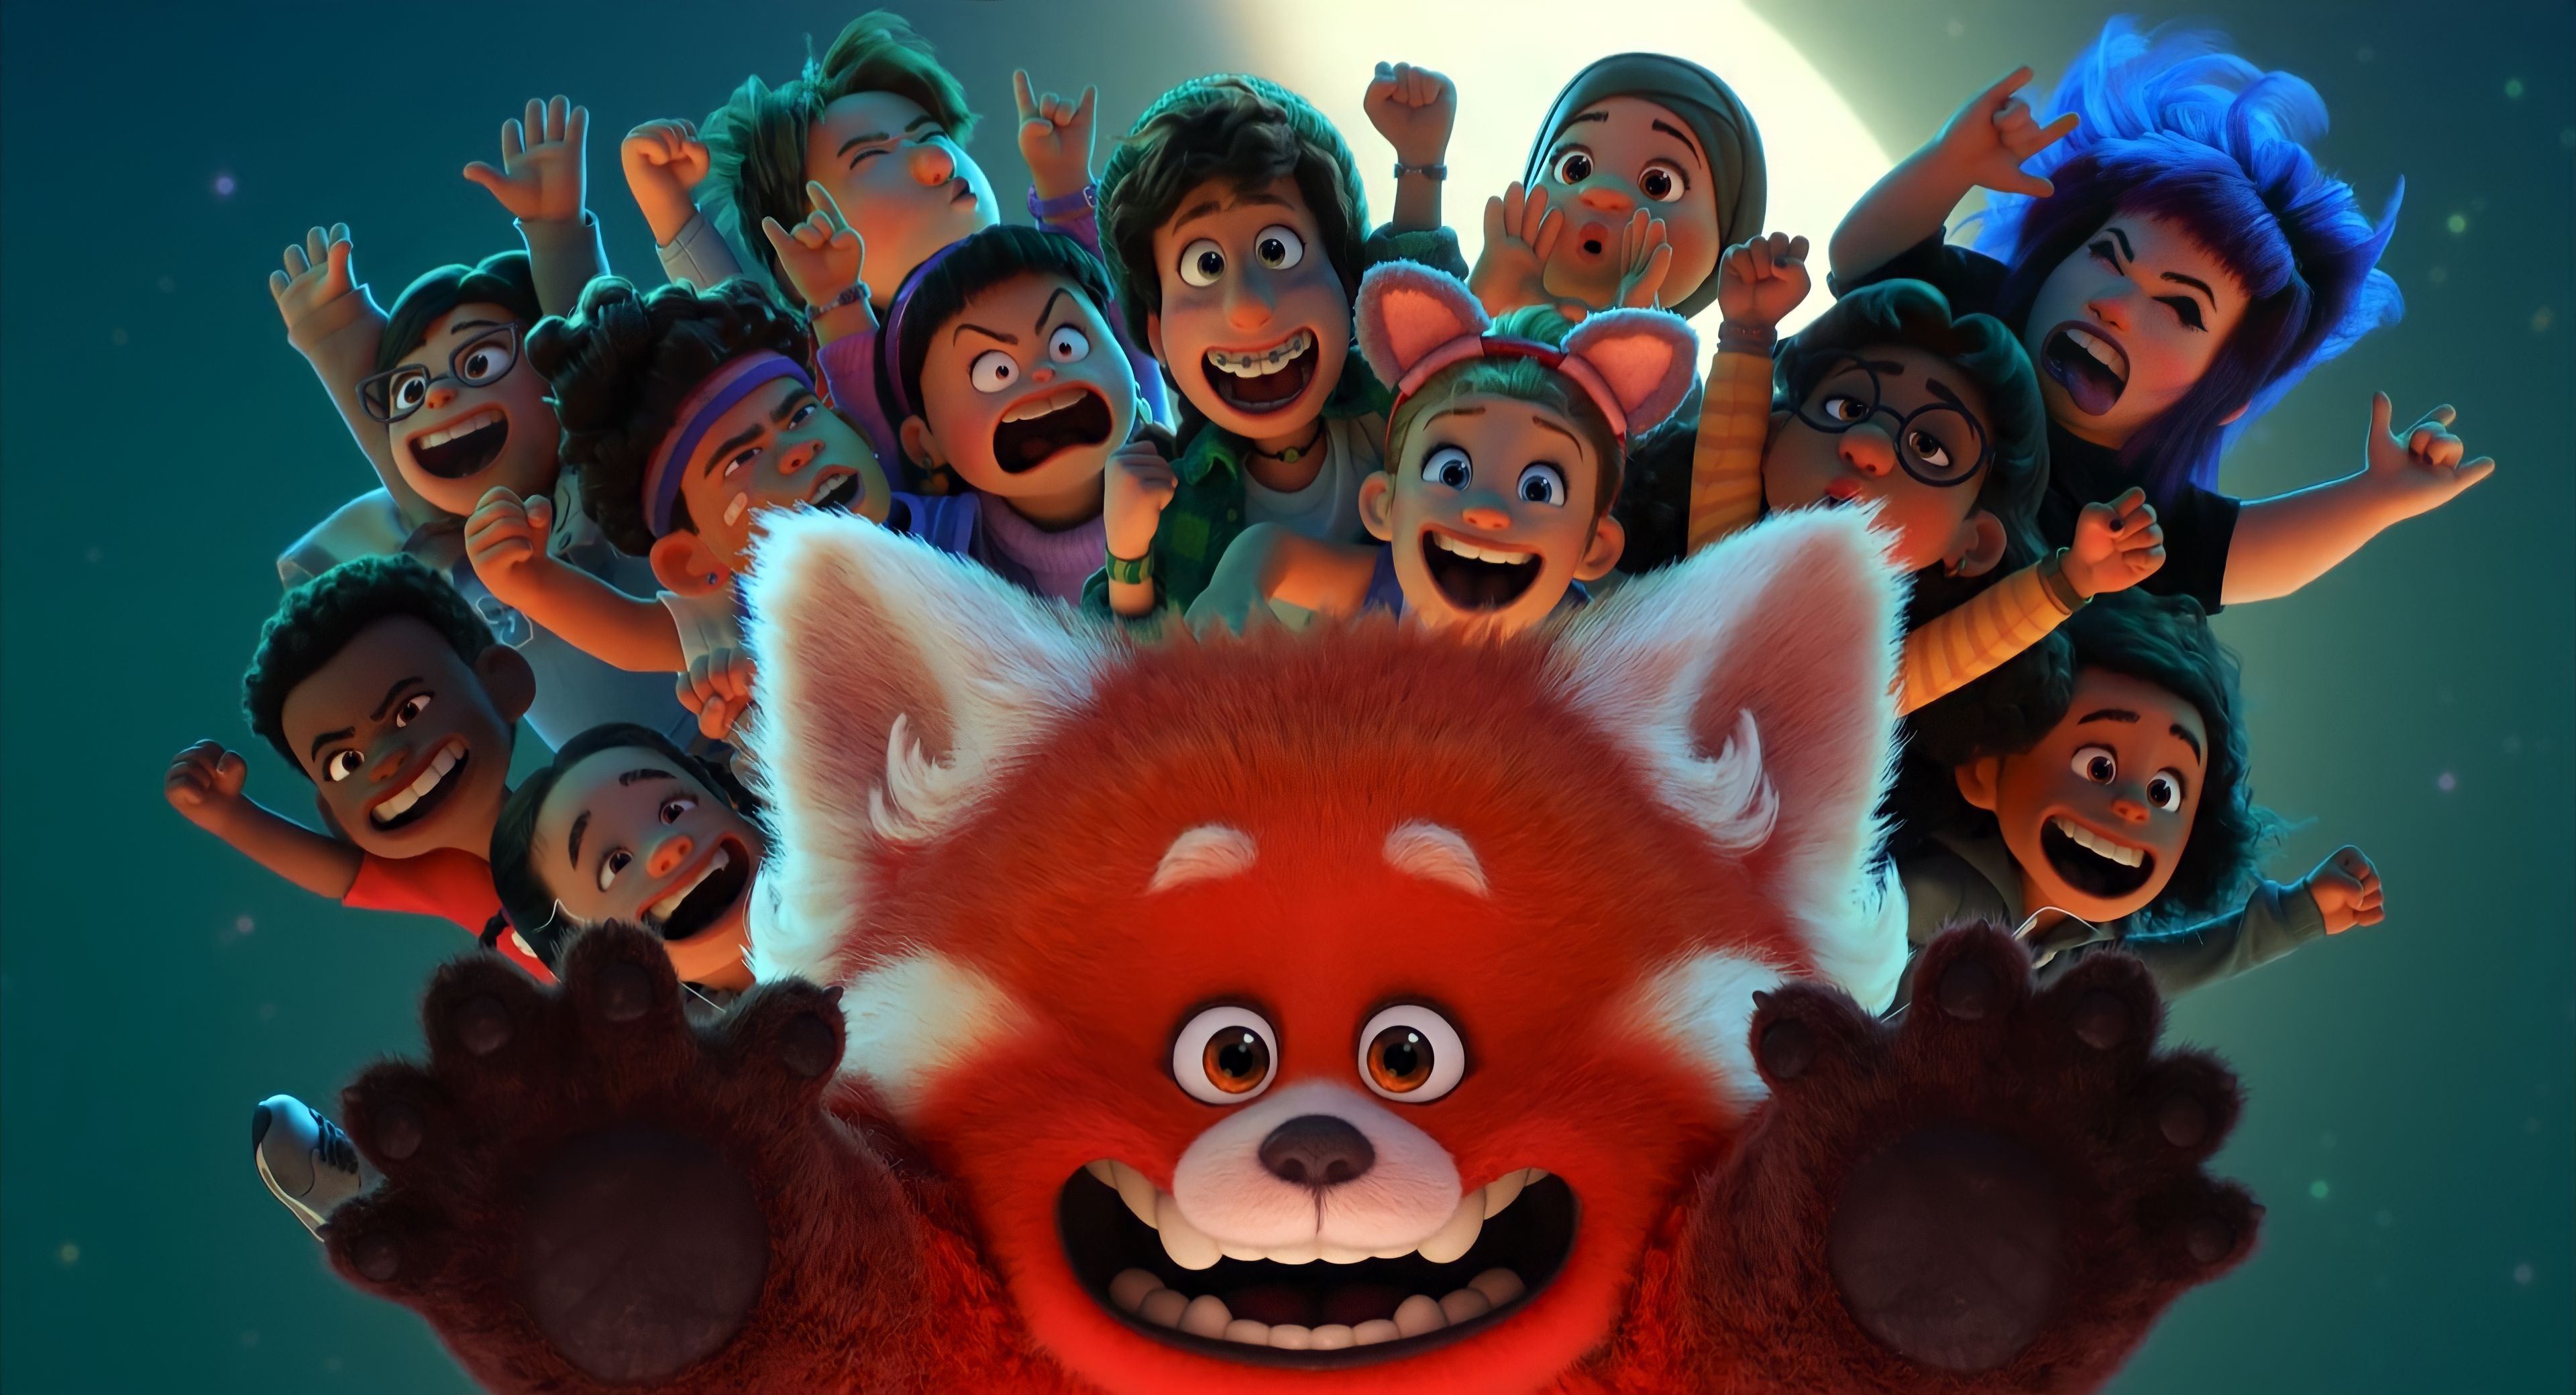 General 3840x2080 turning red animation Pixar Animation Studios red panda digital art